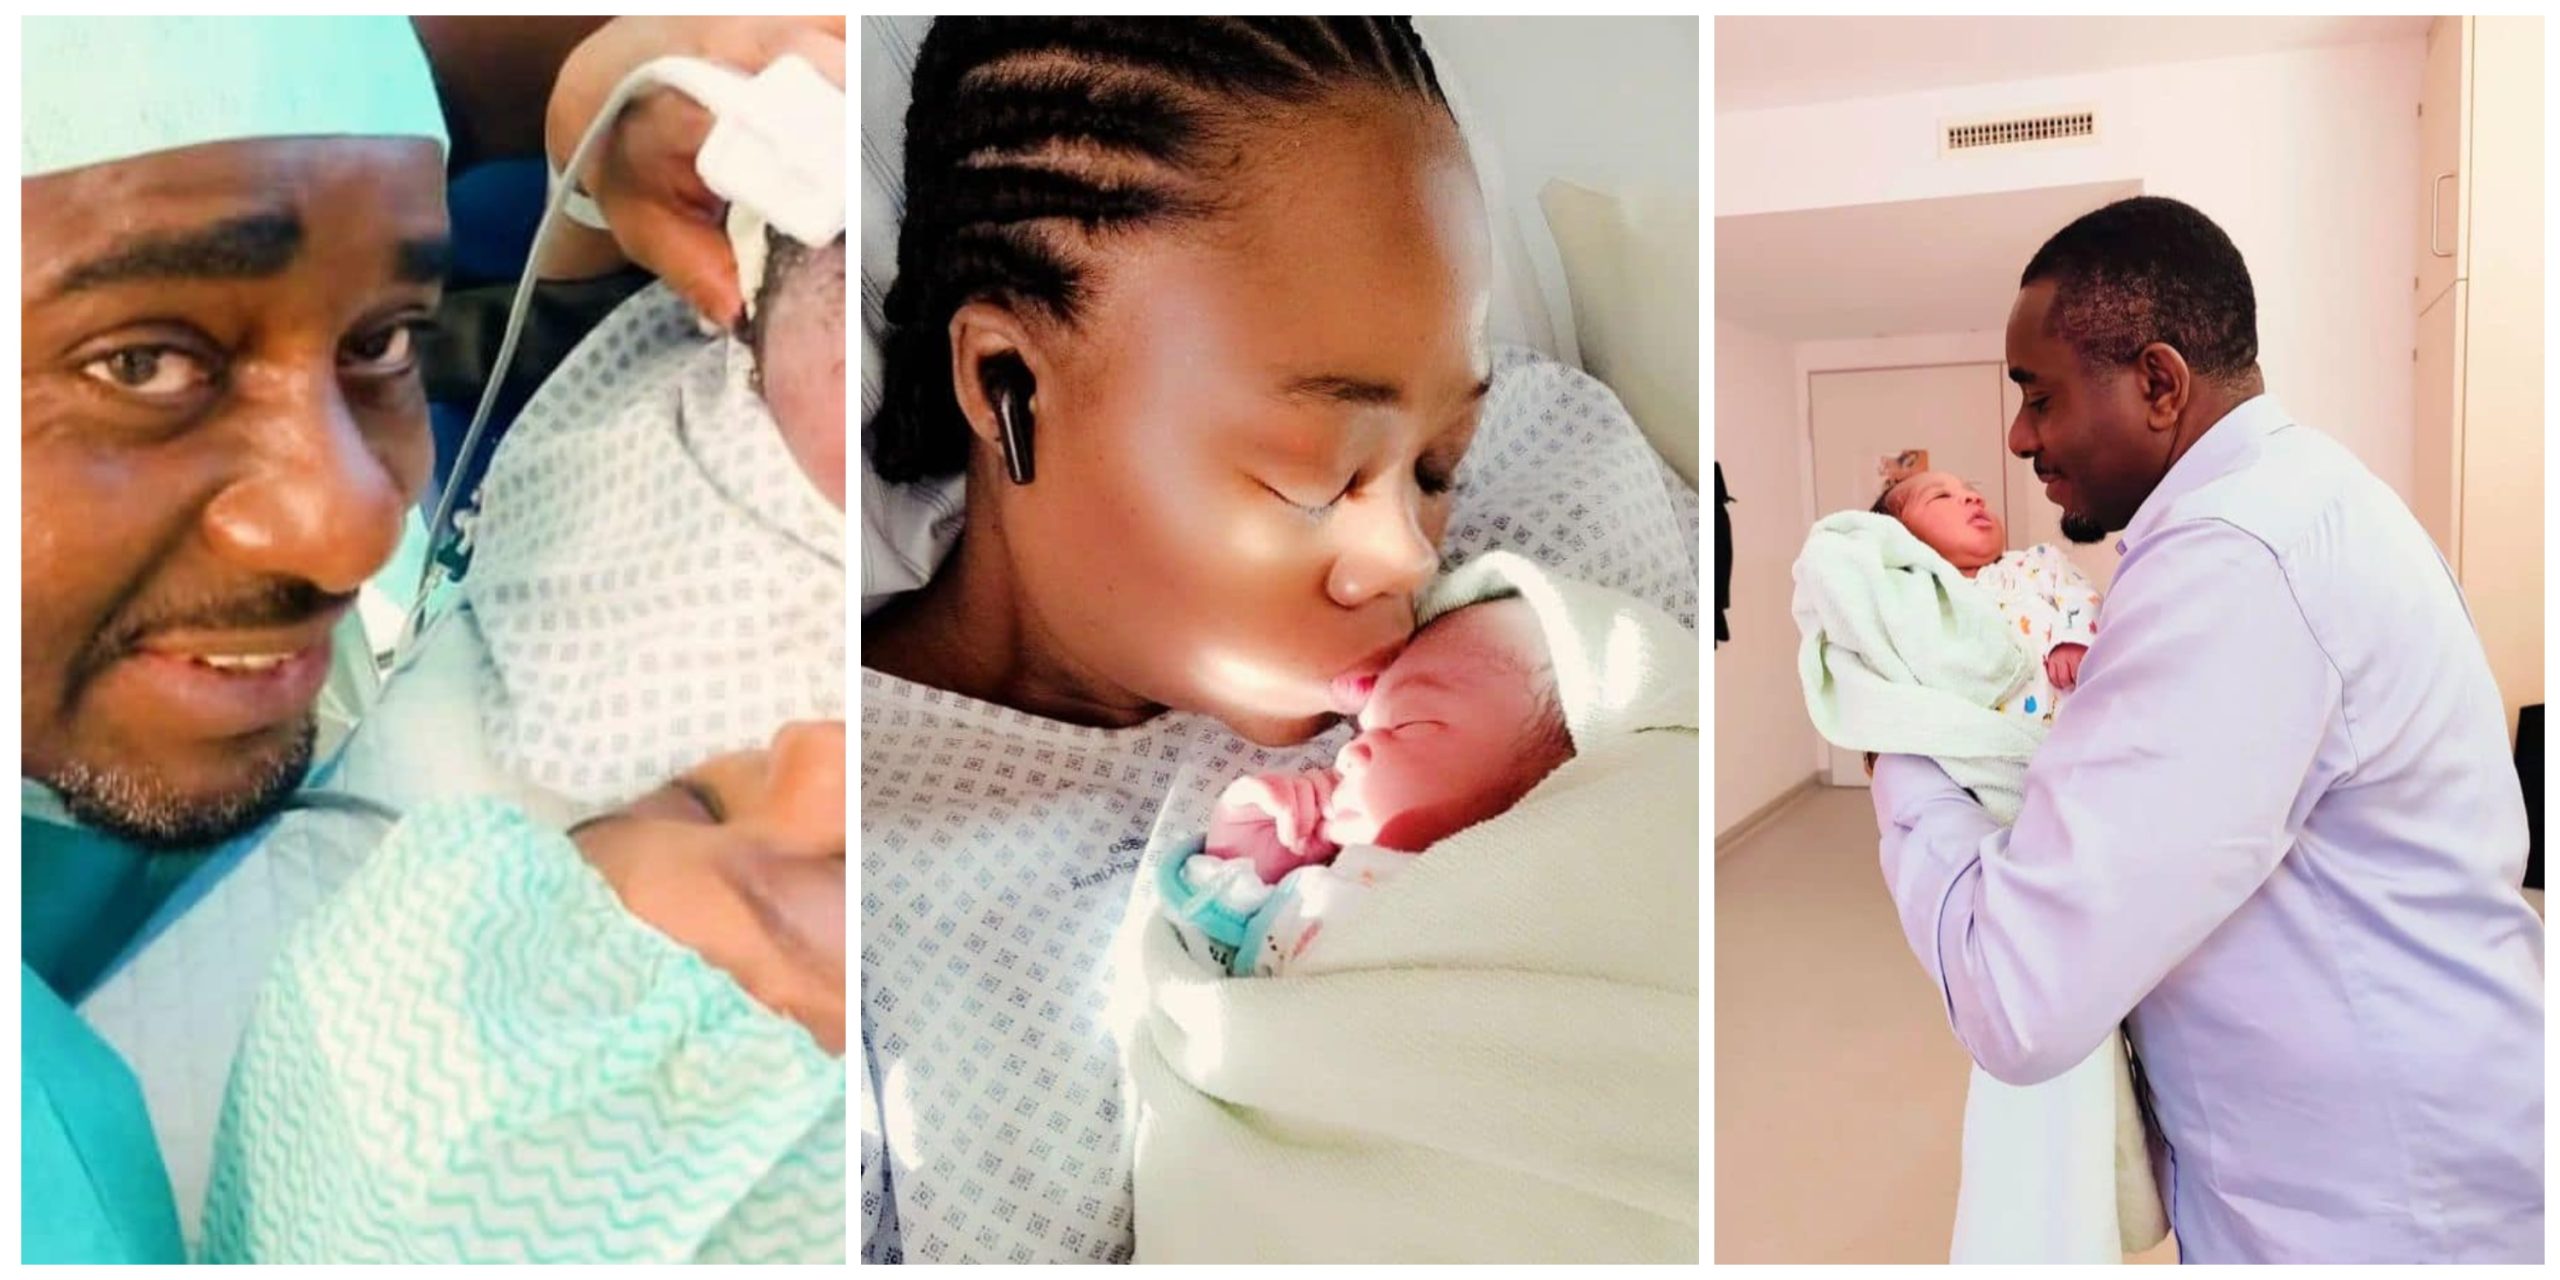 Actor Emeka Ike Welcomes Baby Girl With His Wife On His Birthday [Photos]